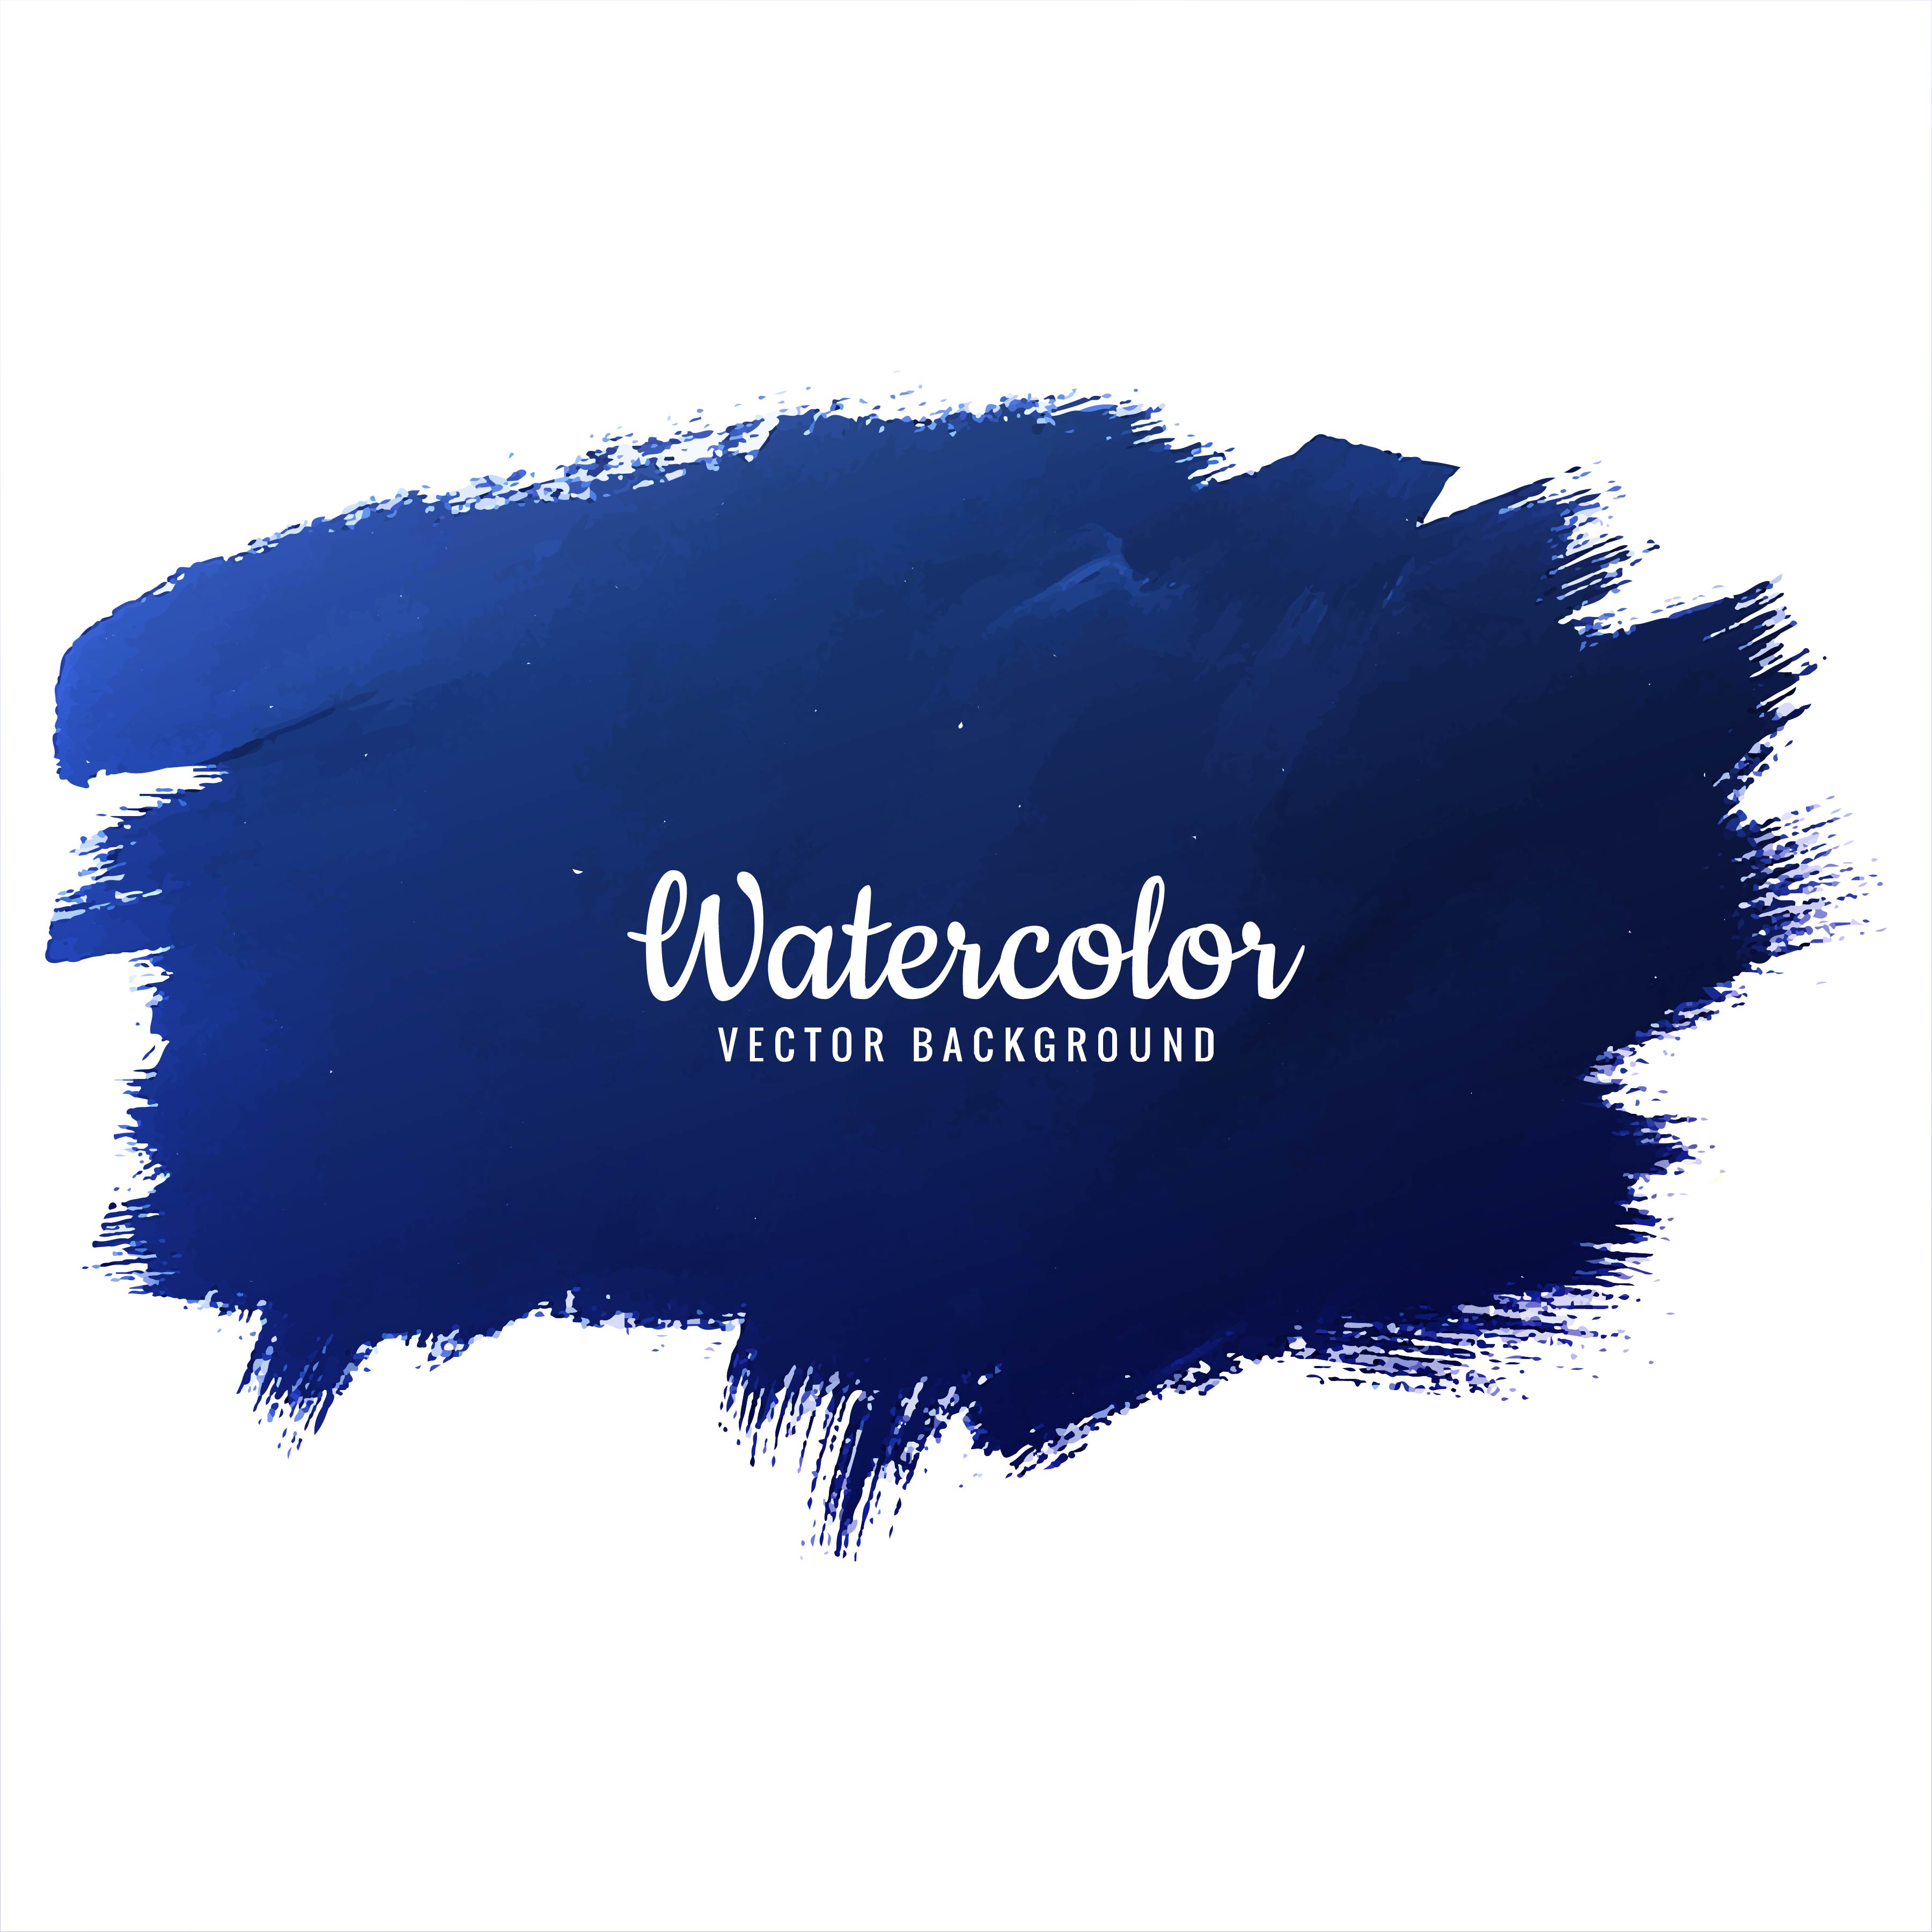 Download Watercolor blue splash design vector 261711 - Download Free Vectors, Clipart Graphics & Vector Art